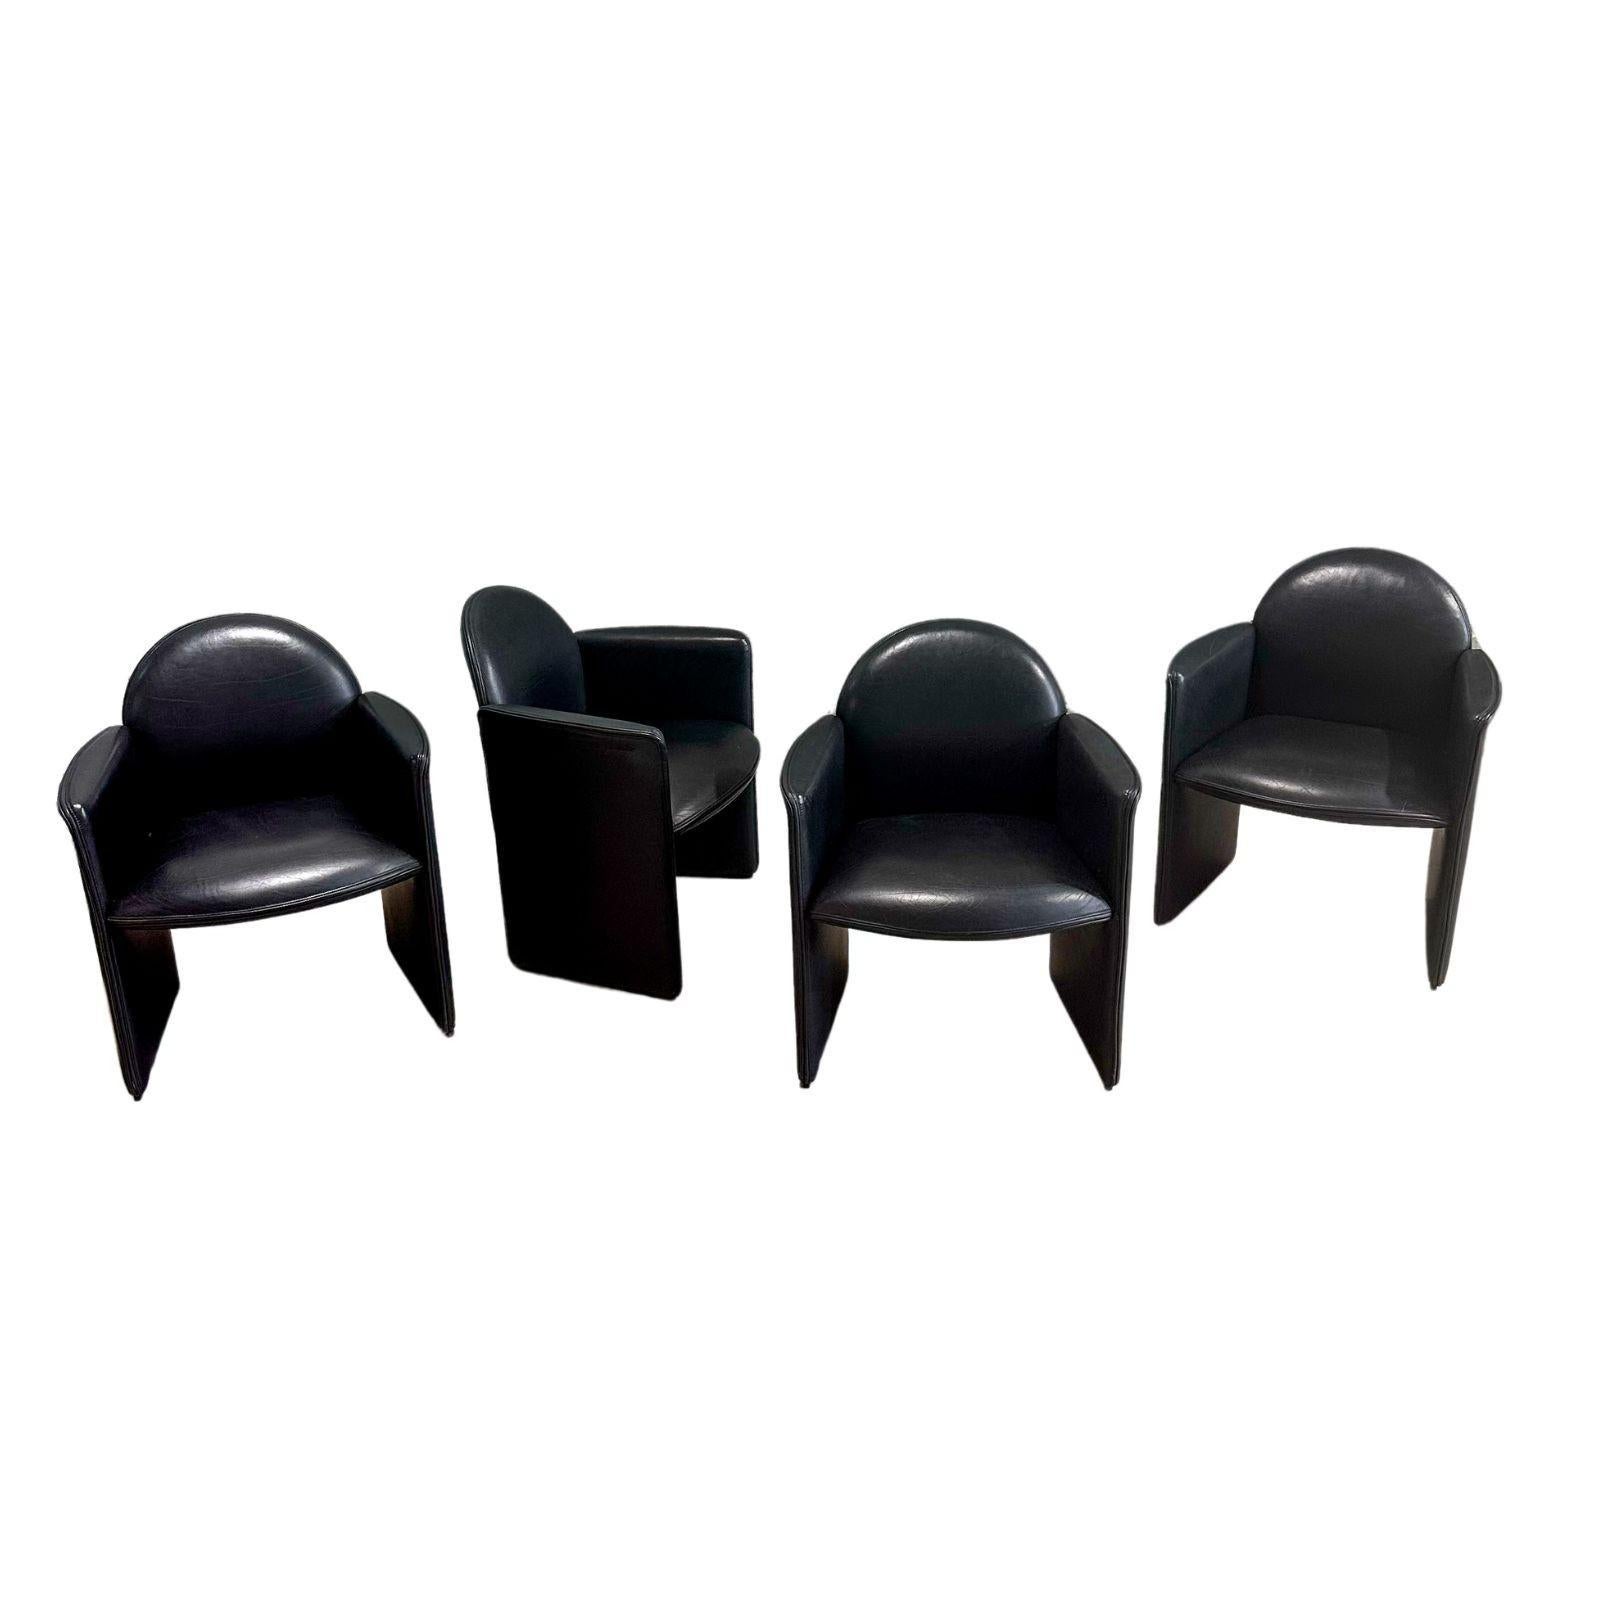 Ensemble de 4 chaises italiennes en cuir noir, Italie 1980. Cuir original.
Mesure 31